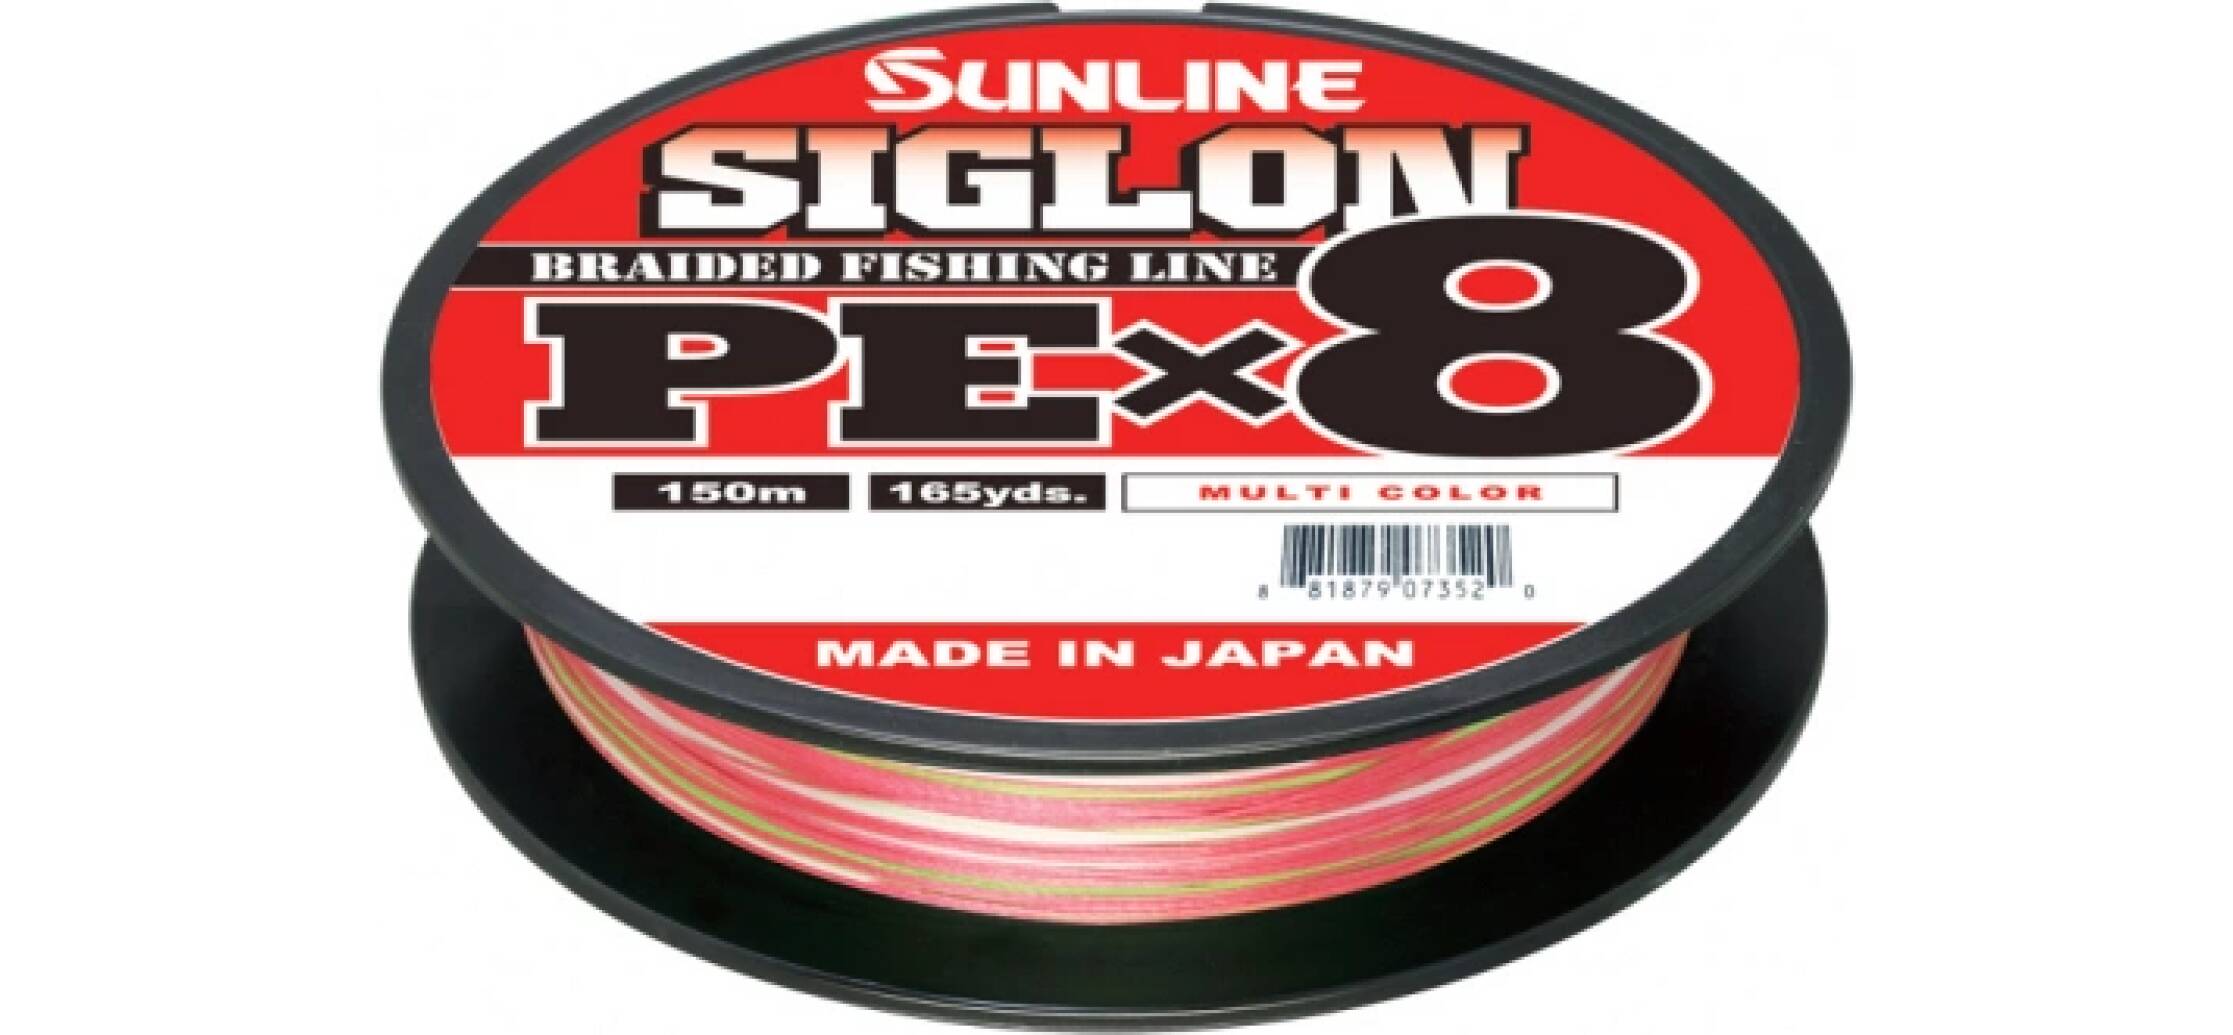 Sunline Siglon PE X8 Braid, Multi Color 22kg 150m - 0.296mm